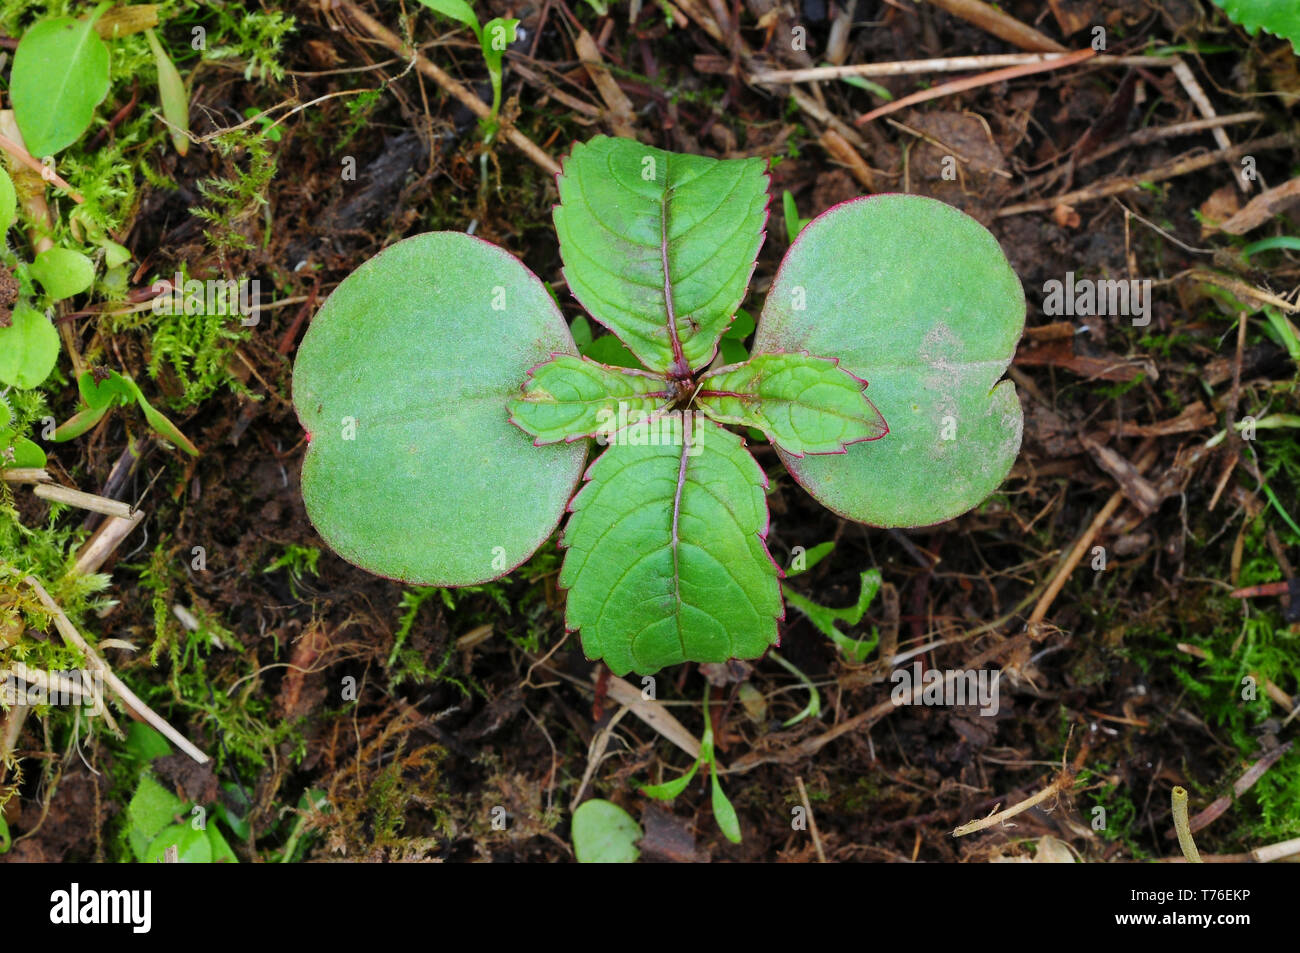 Indian or Himalayan balsam seedling. Dorset, UK Stock Photo